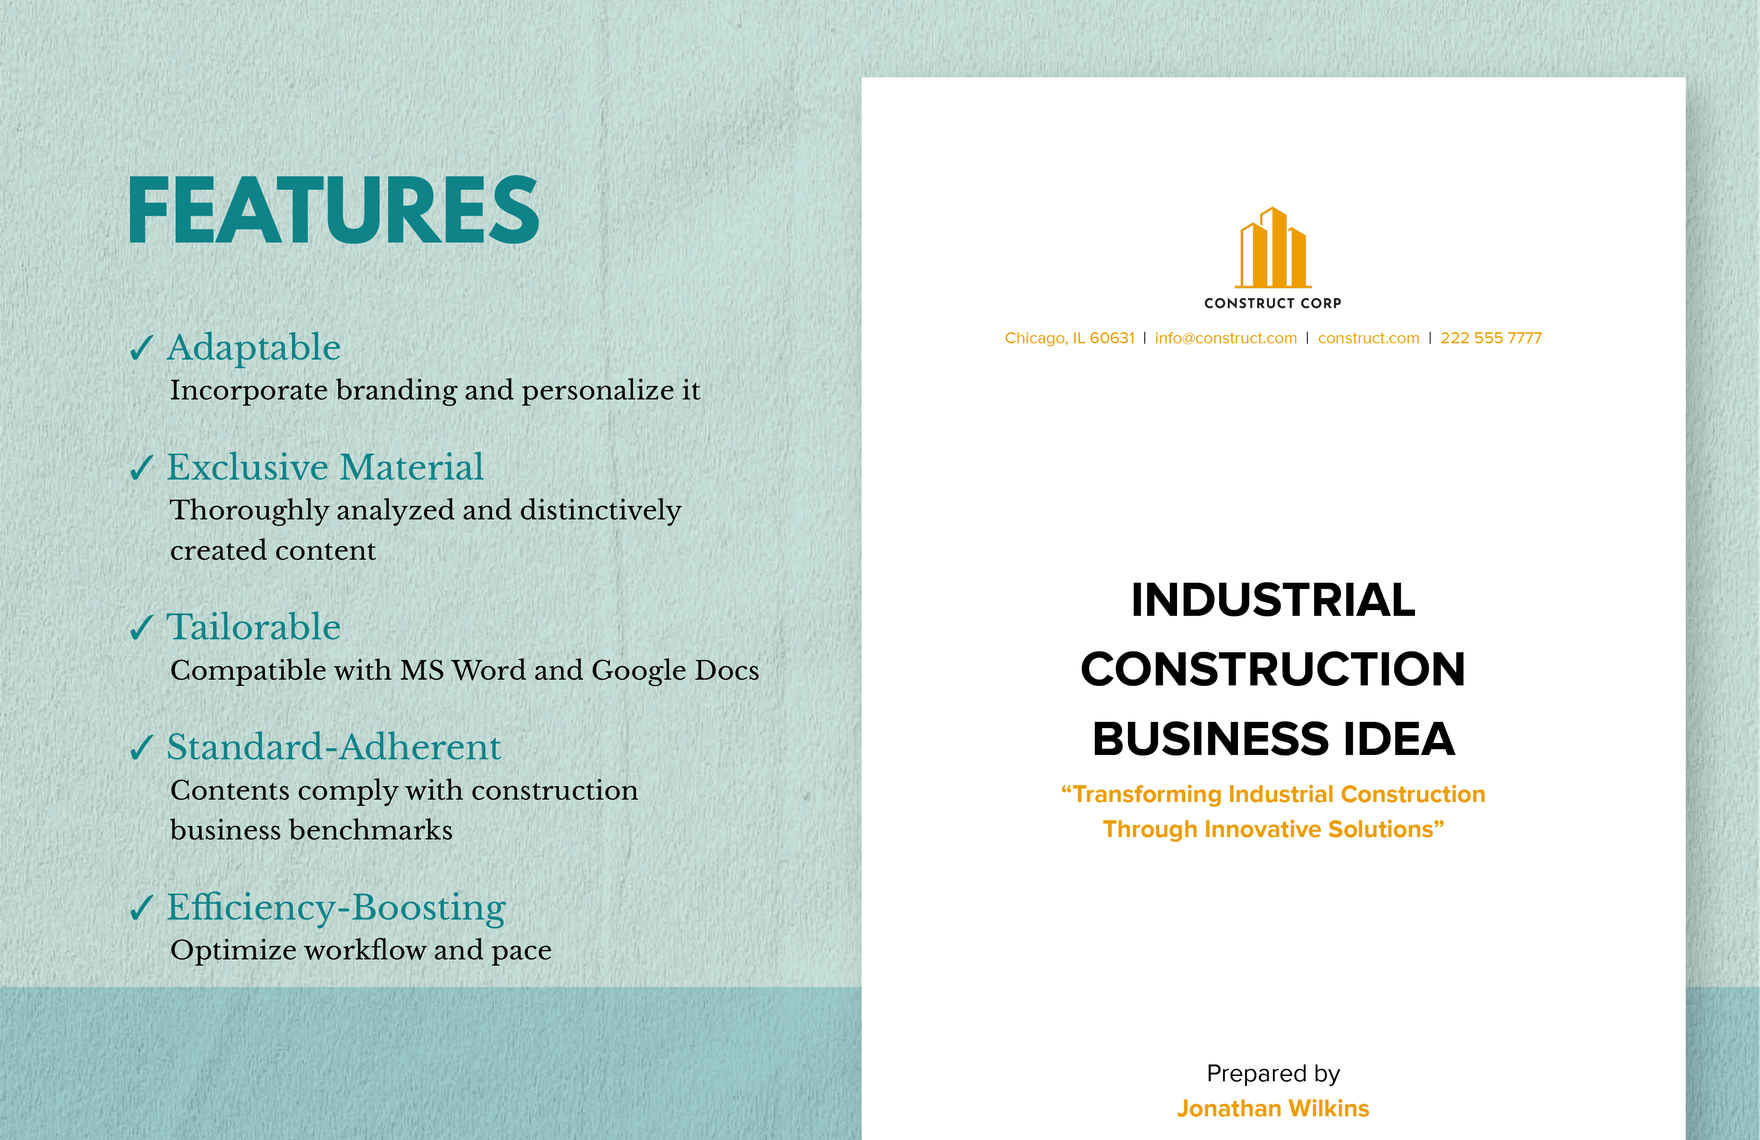 Industrial Construction Business Idea